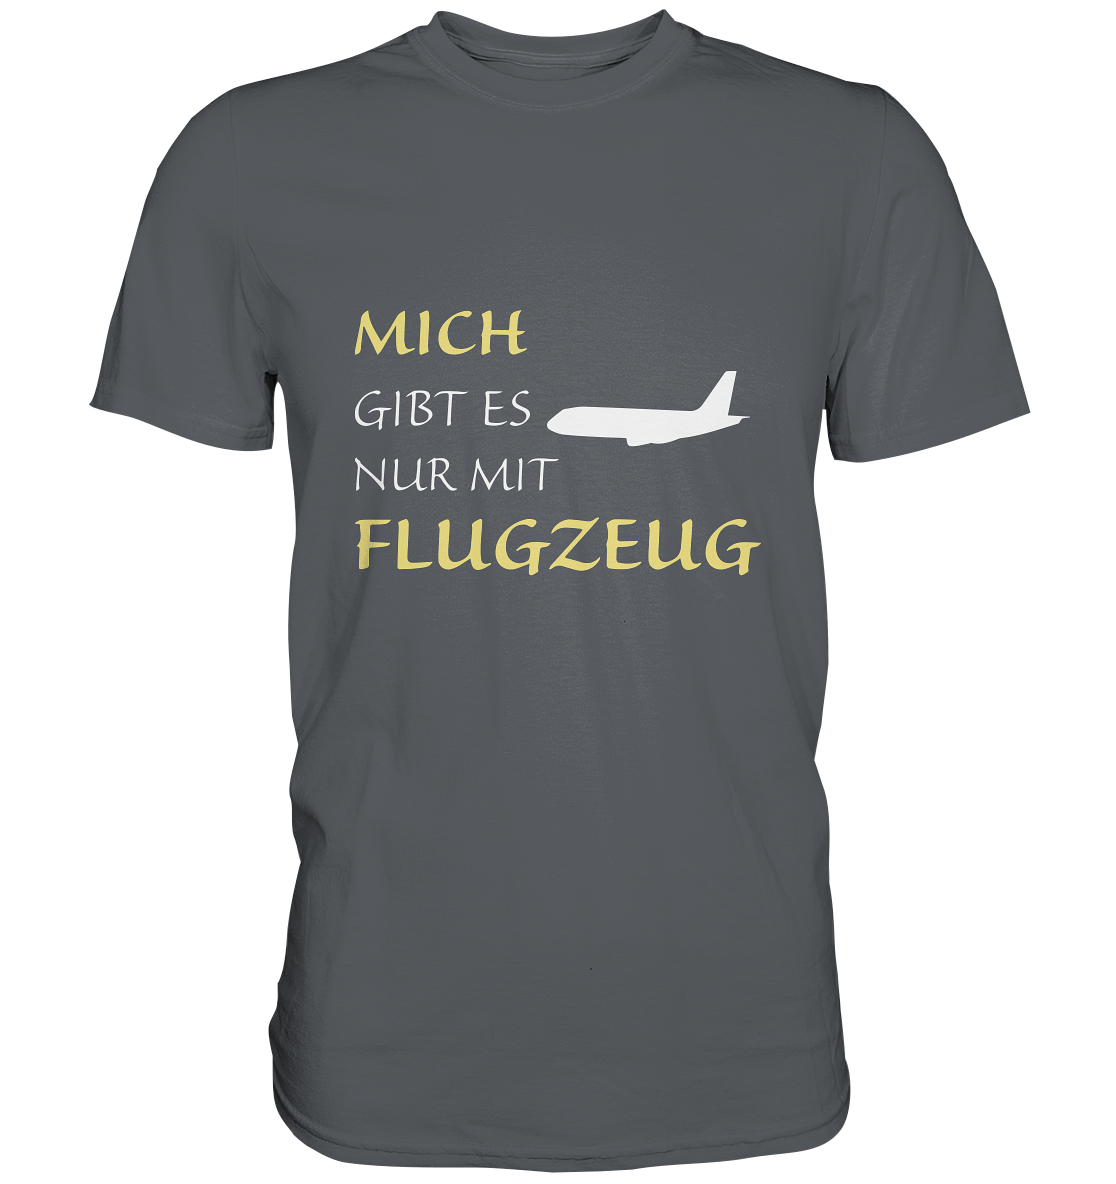 NUR MIT FLUGZEUG - Classic Shirt